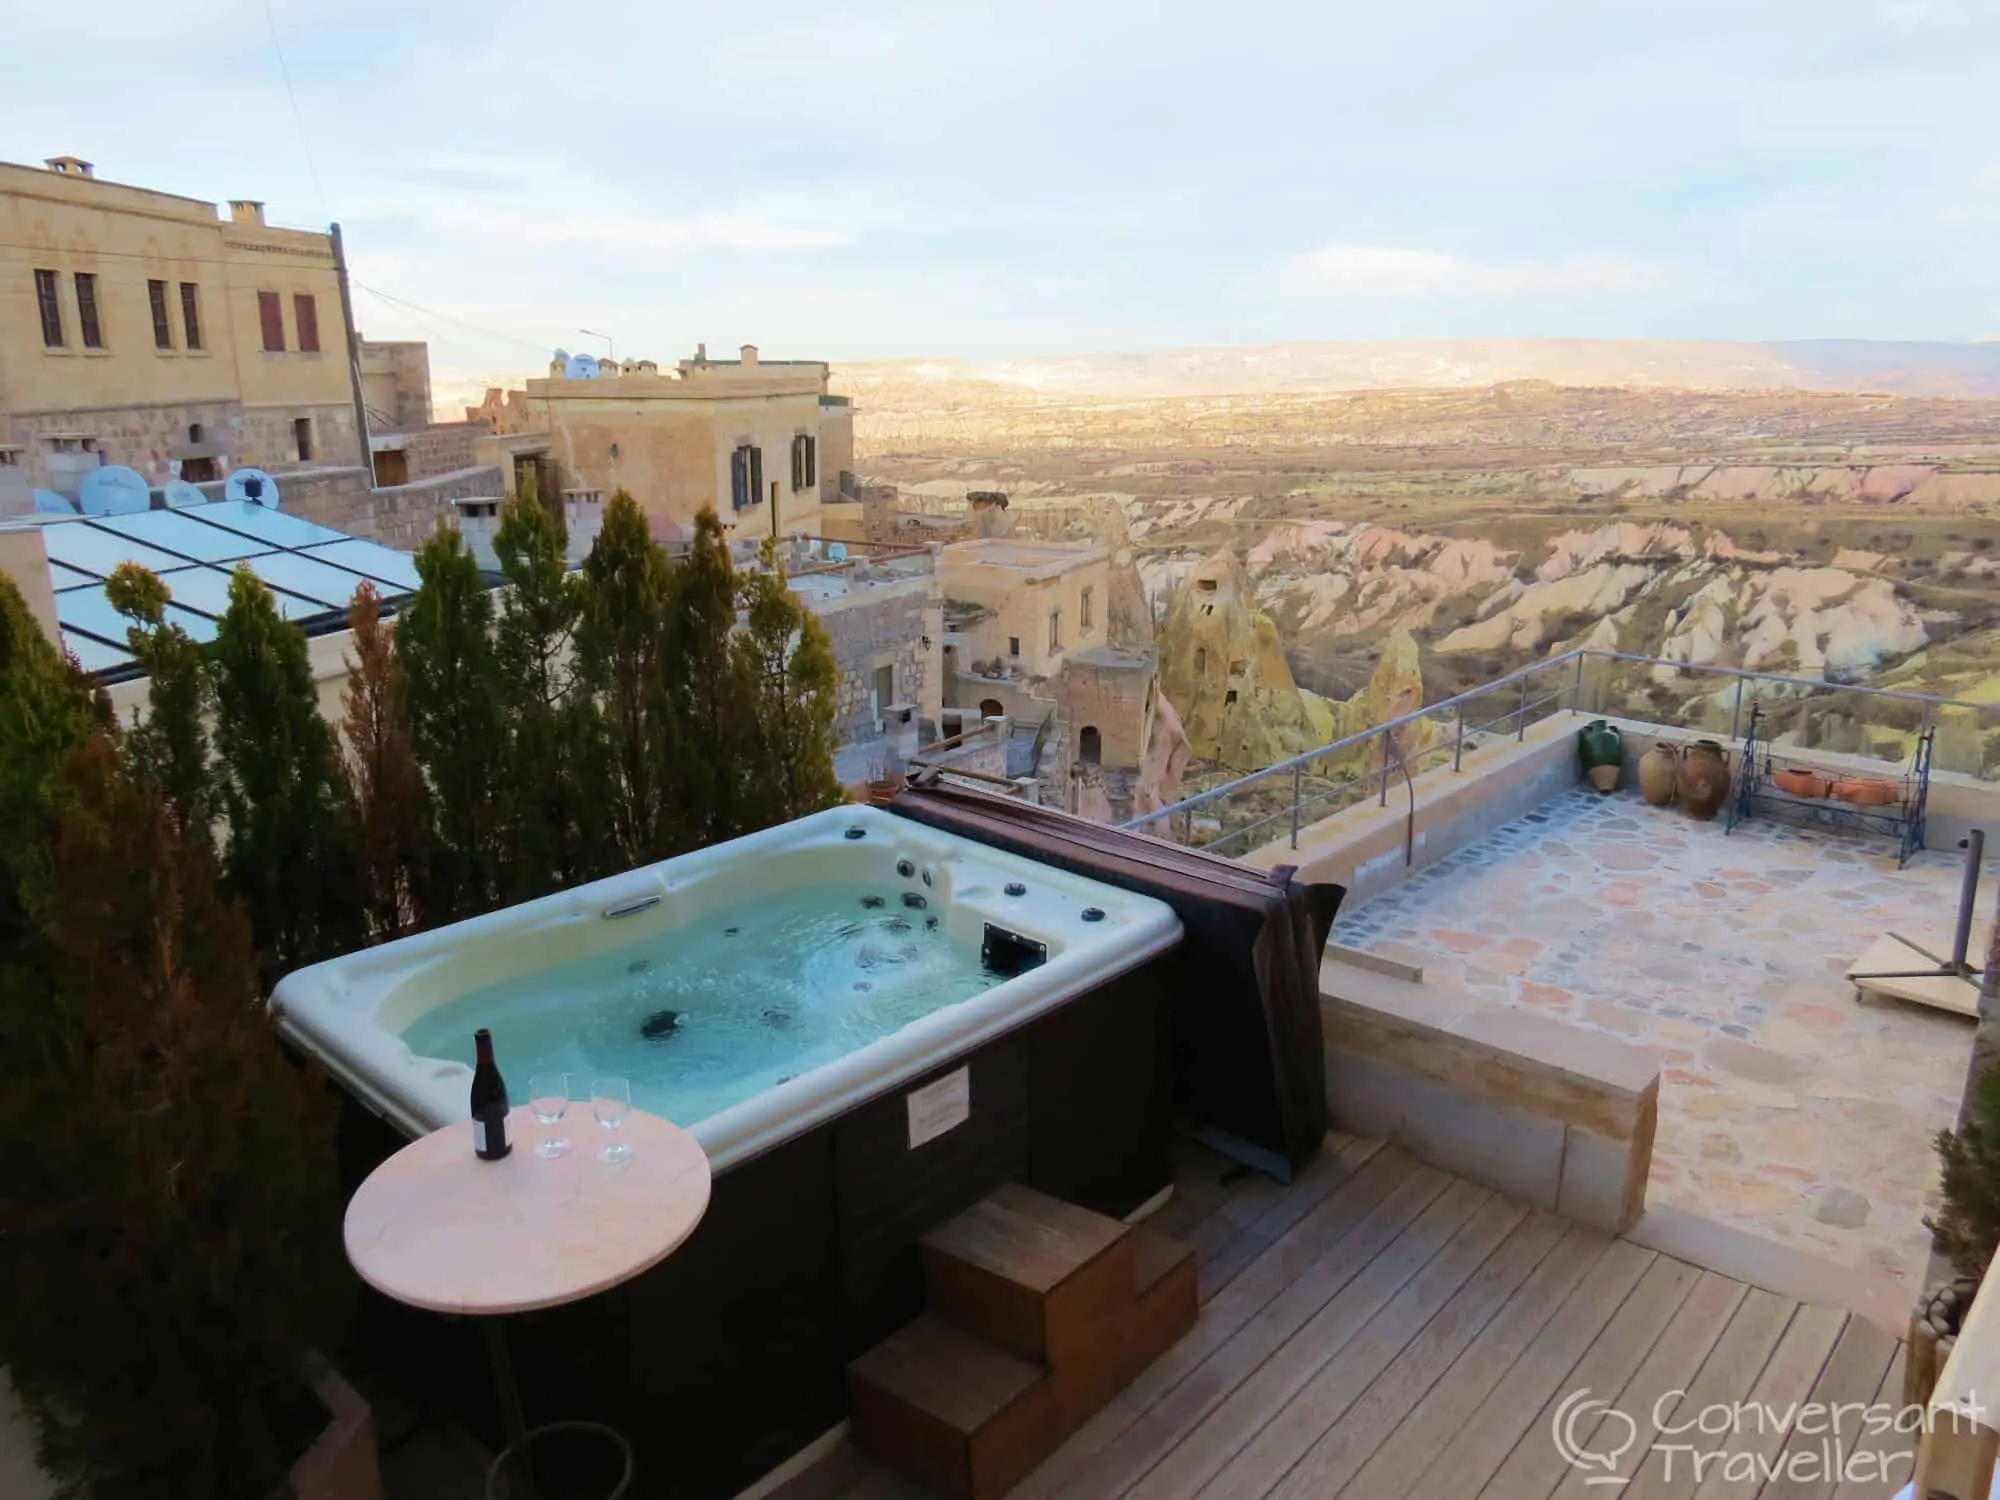 Hot tub for two! Taskonaklar boutique hotel, Uchisar, Turkey